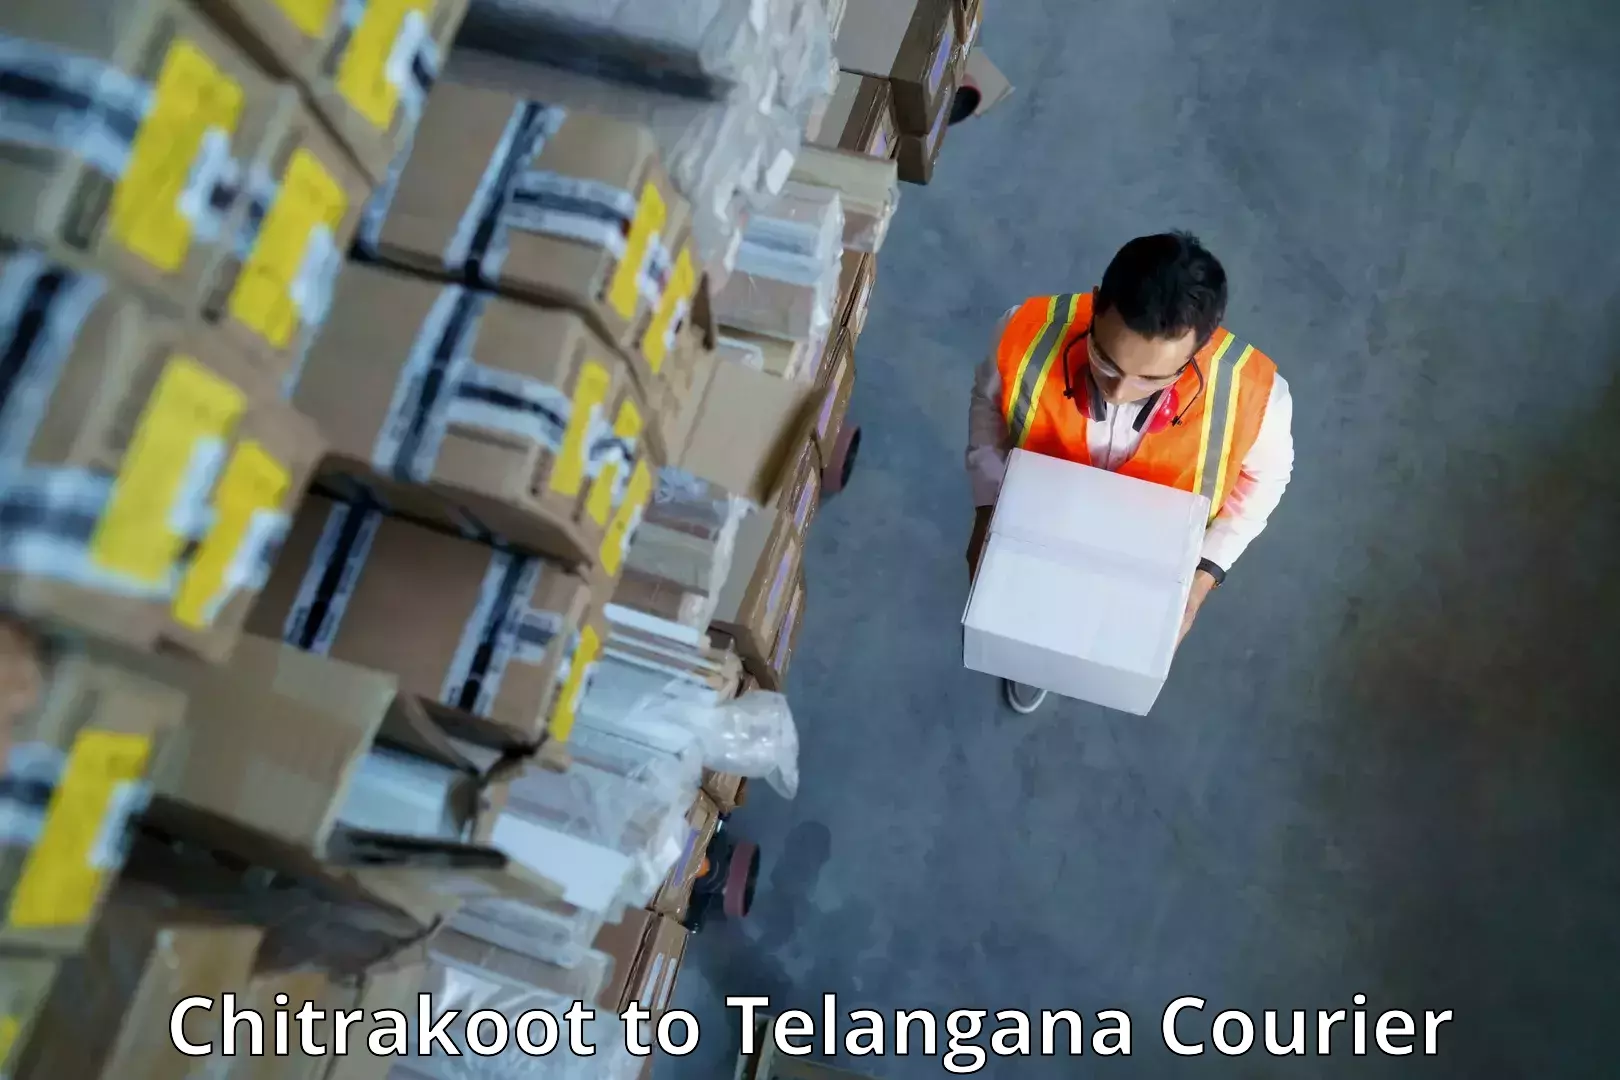 Professional courier handling Chitrakoot to Telangana